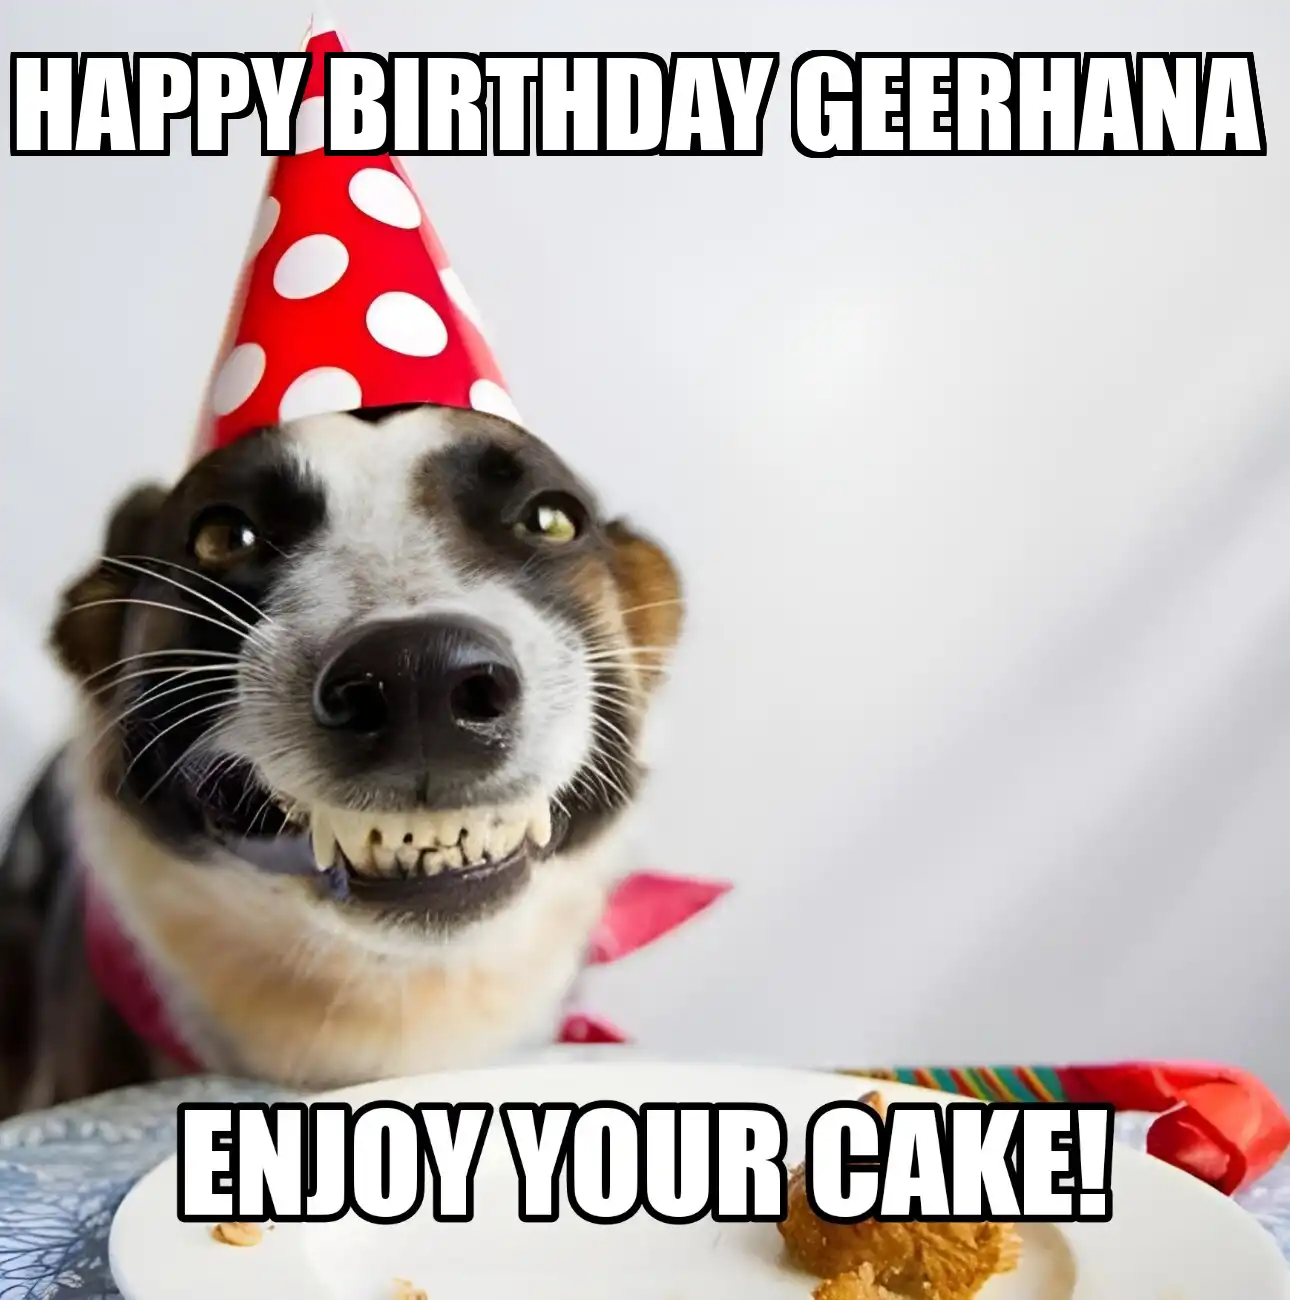 Happy Birthday Geerhana Enjoy Your Cake Dog Meme